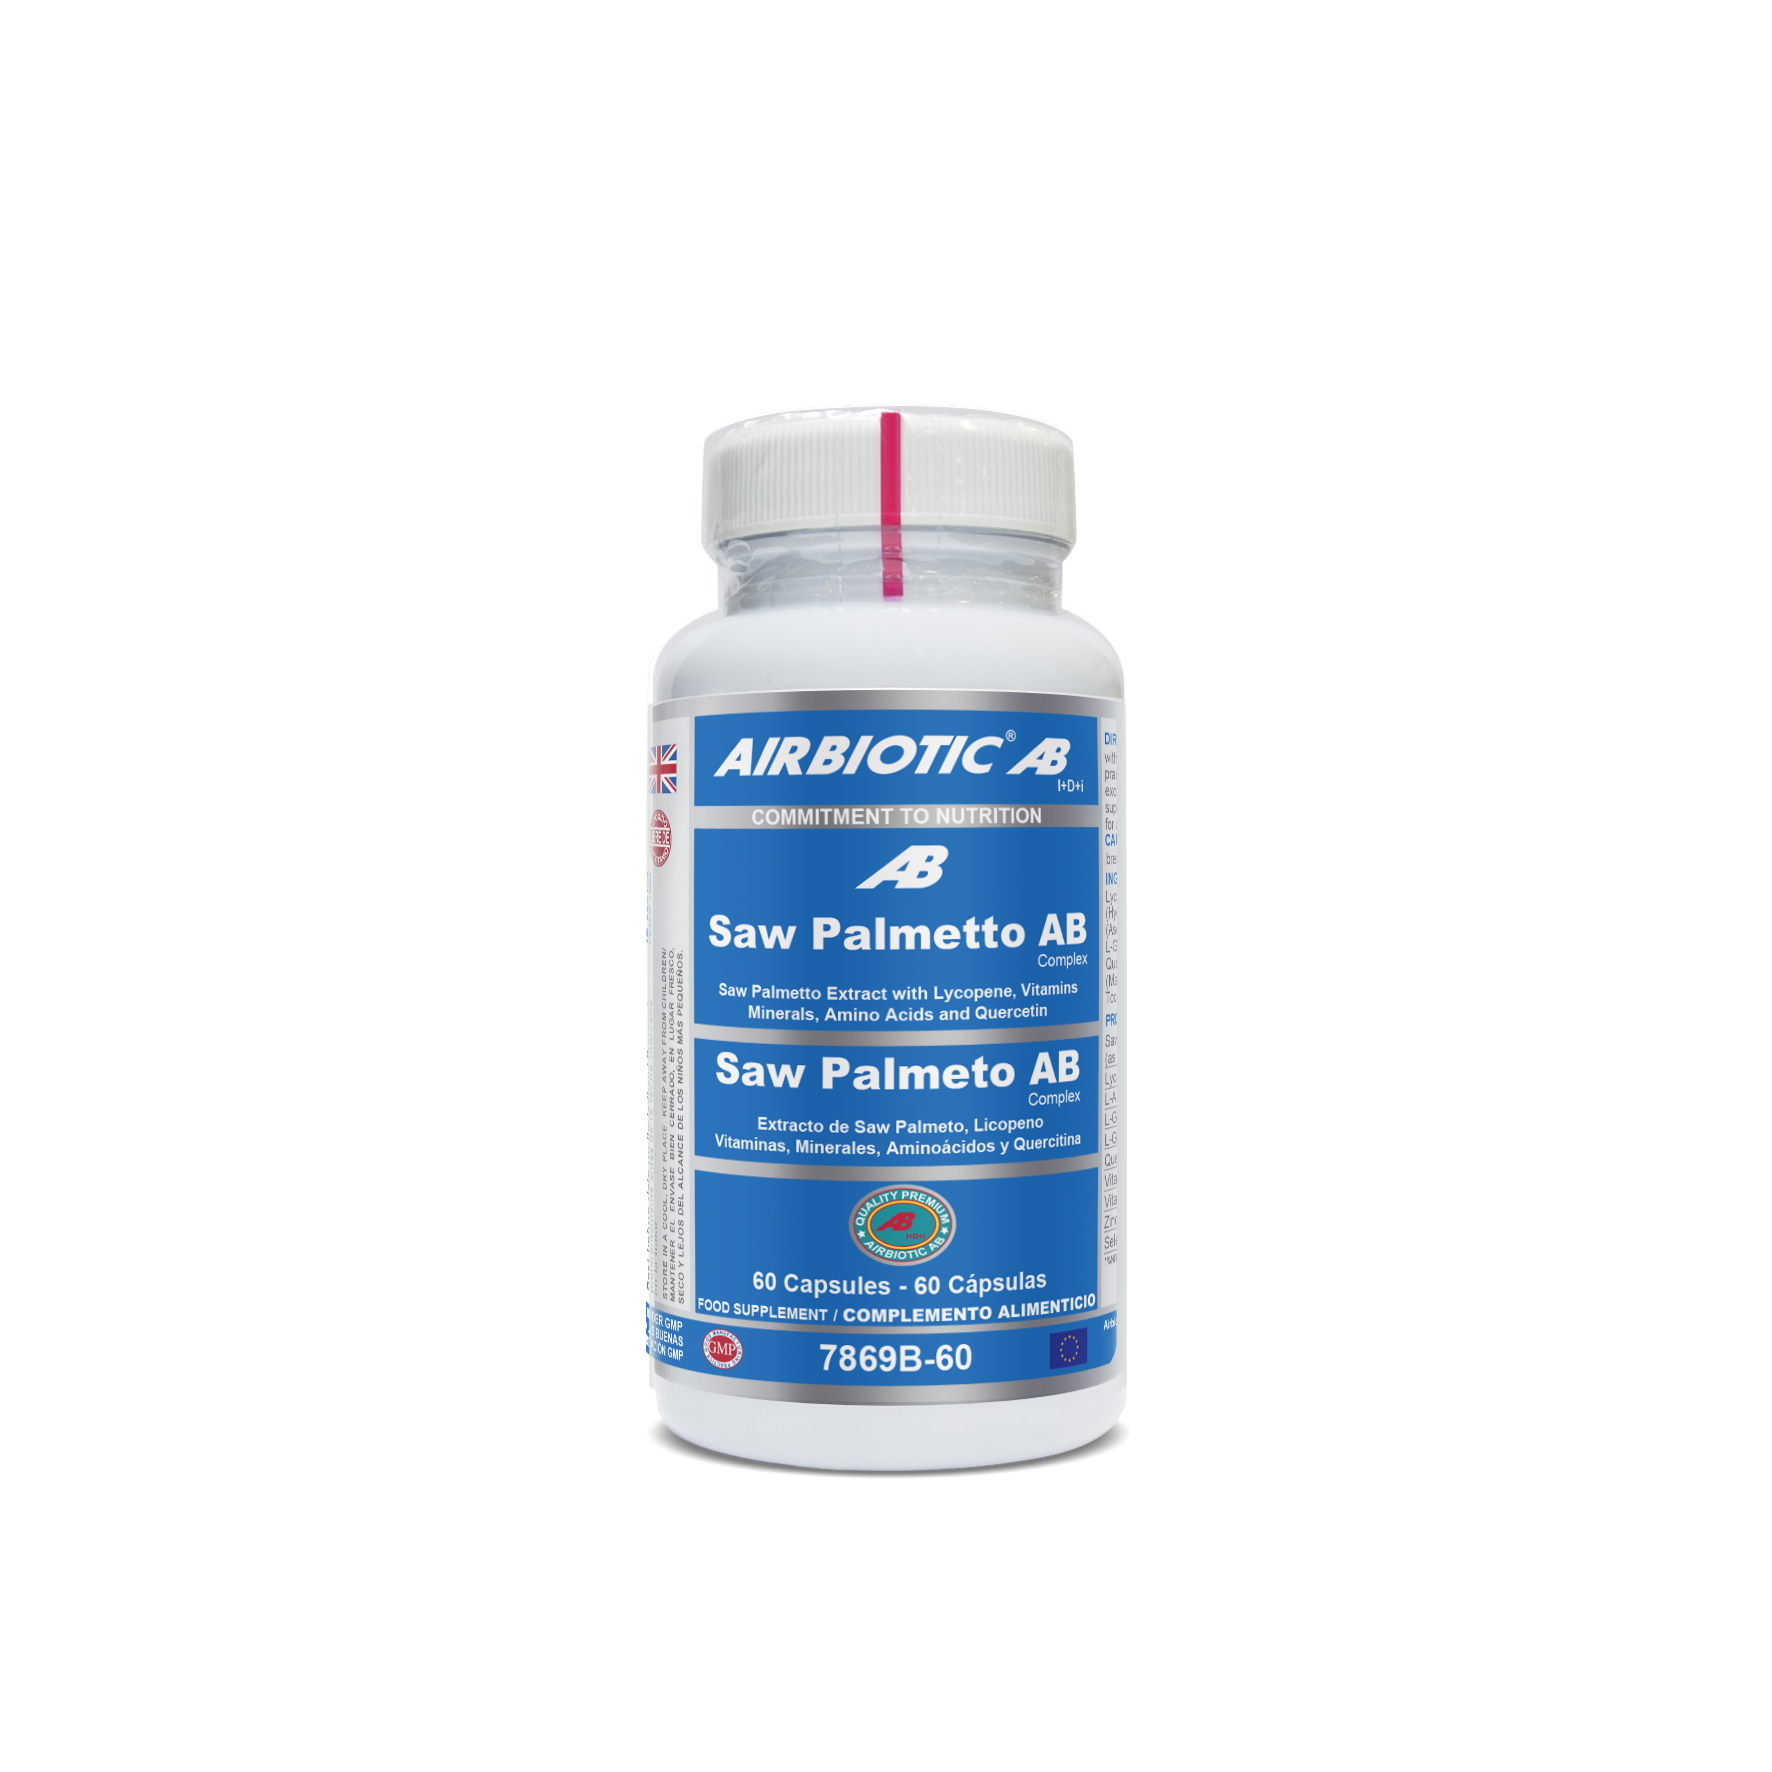 Airbiotic Saw Palmetto AB complex, 60 cápsulas| Farmacia Barata